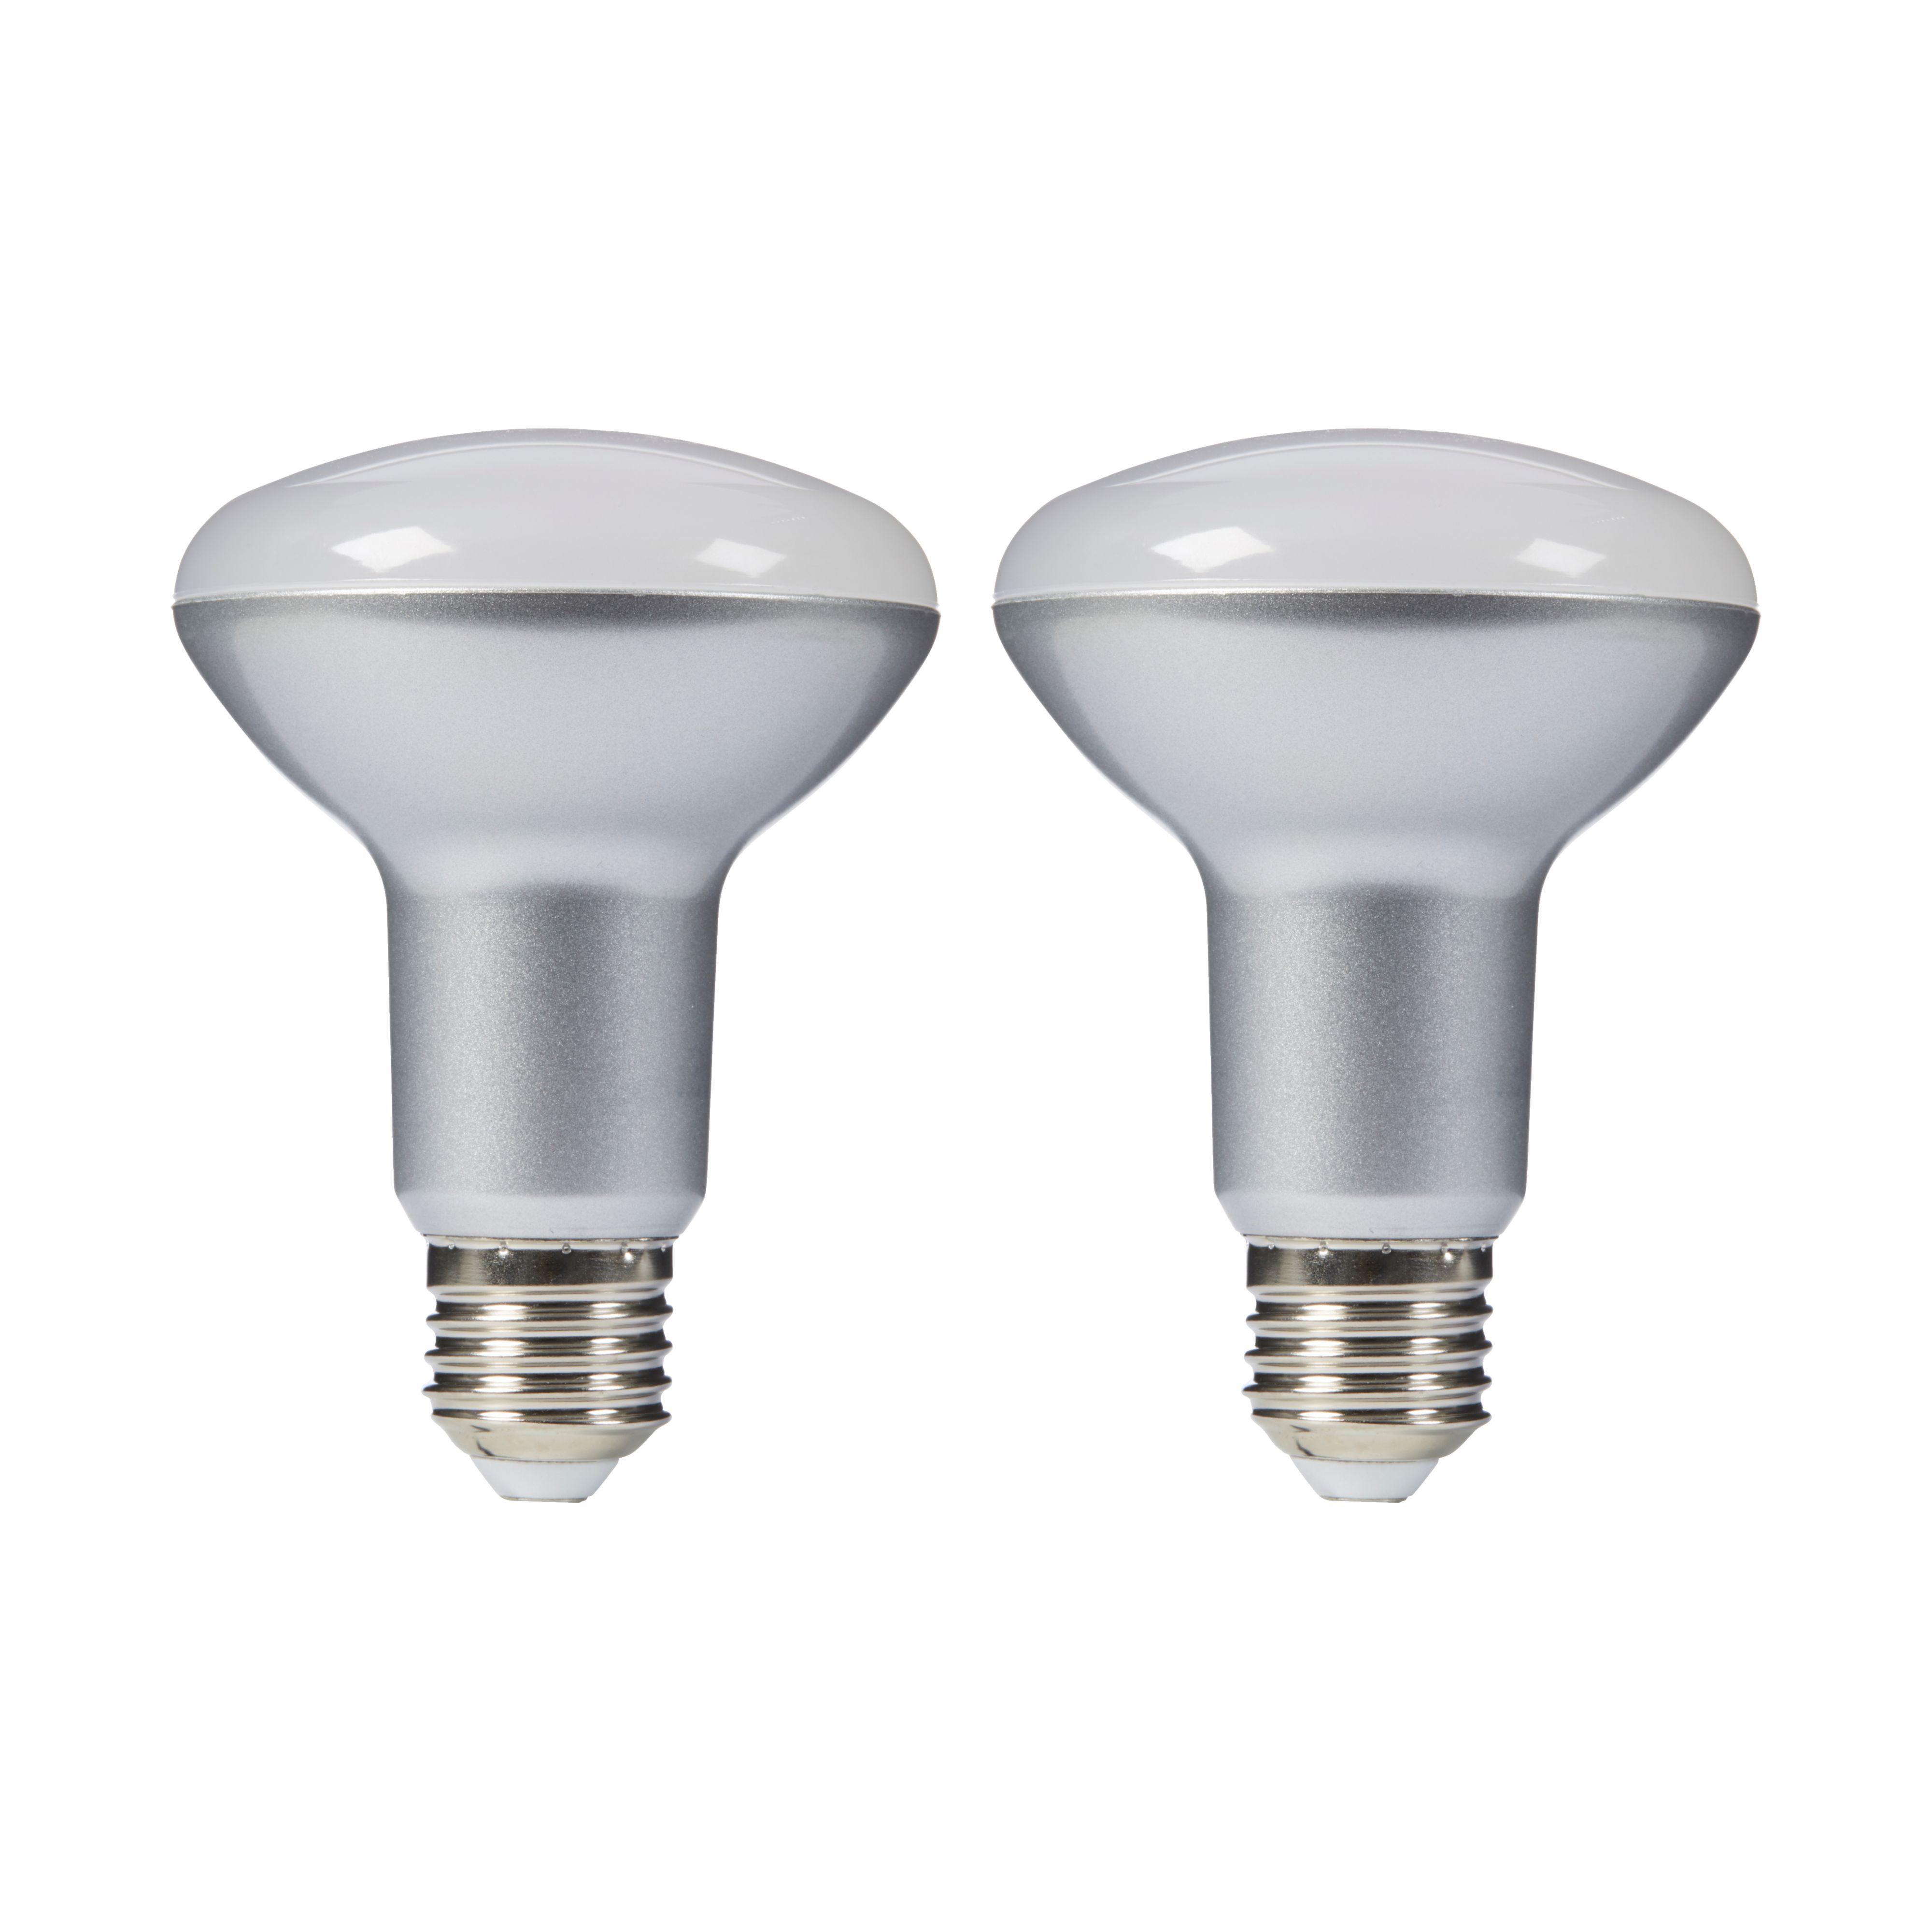 Diall 1335lm Warm white LED Light bulb, Pack of 2